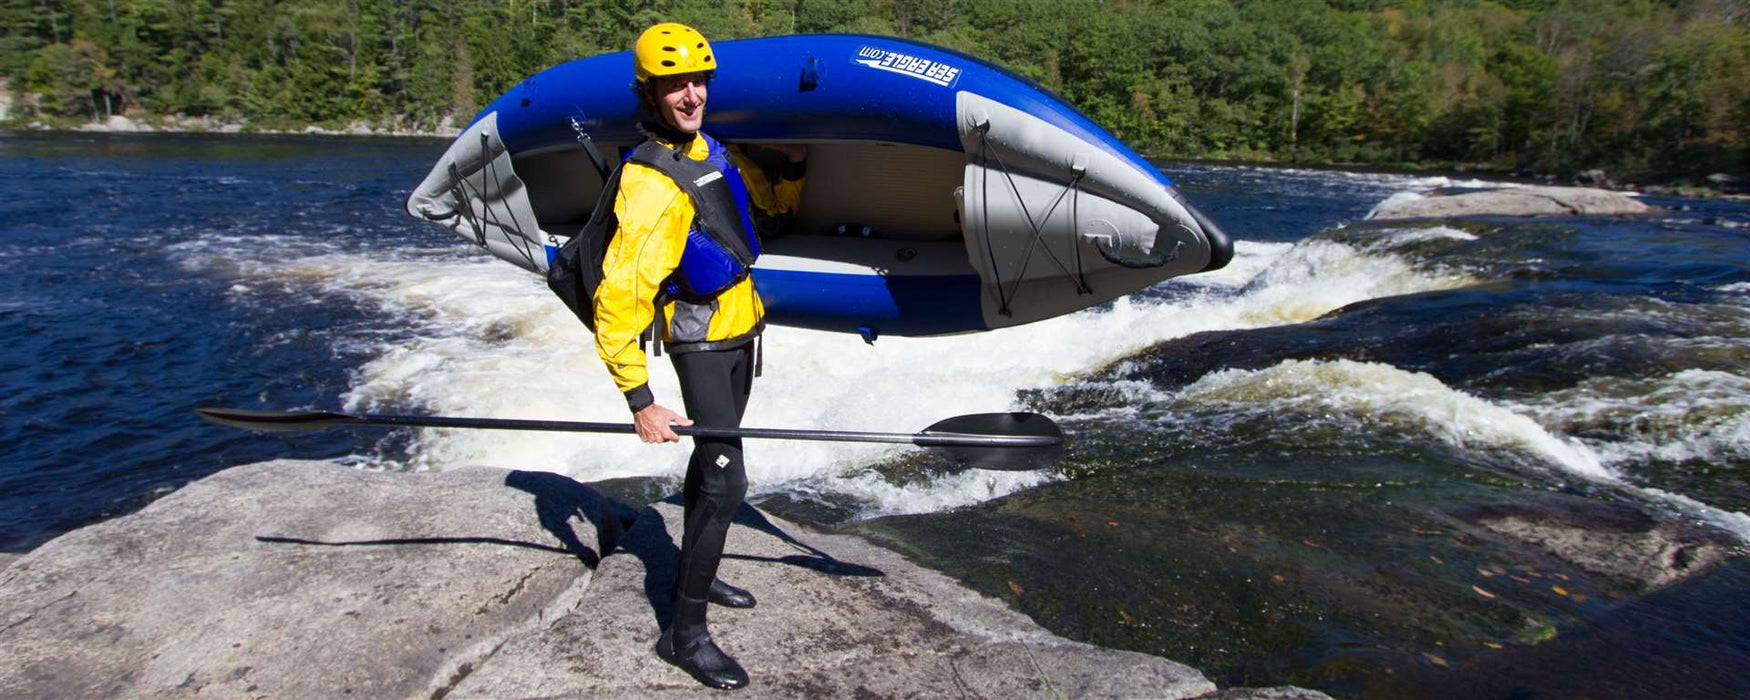 300x Explorer Inflatable Kayak Pro Carbon Package by SeaEagle 300XK_PC SeaEagle